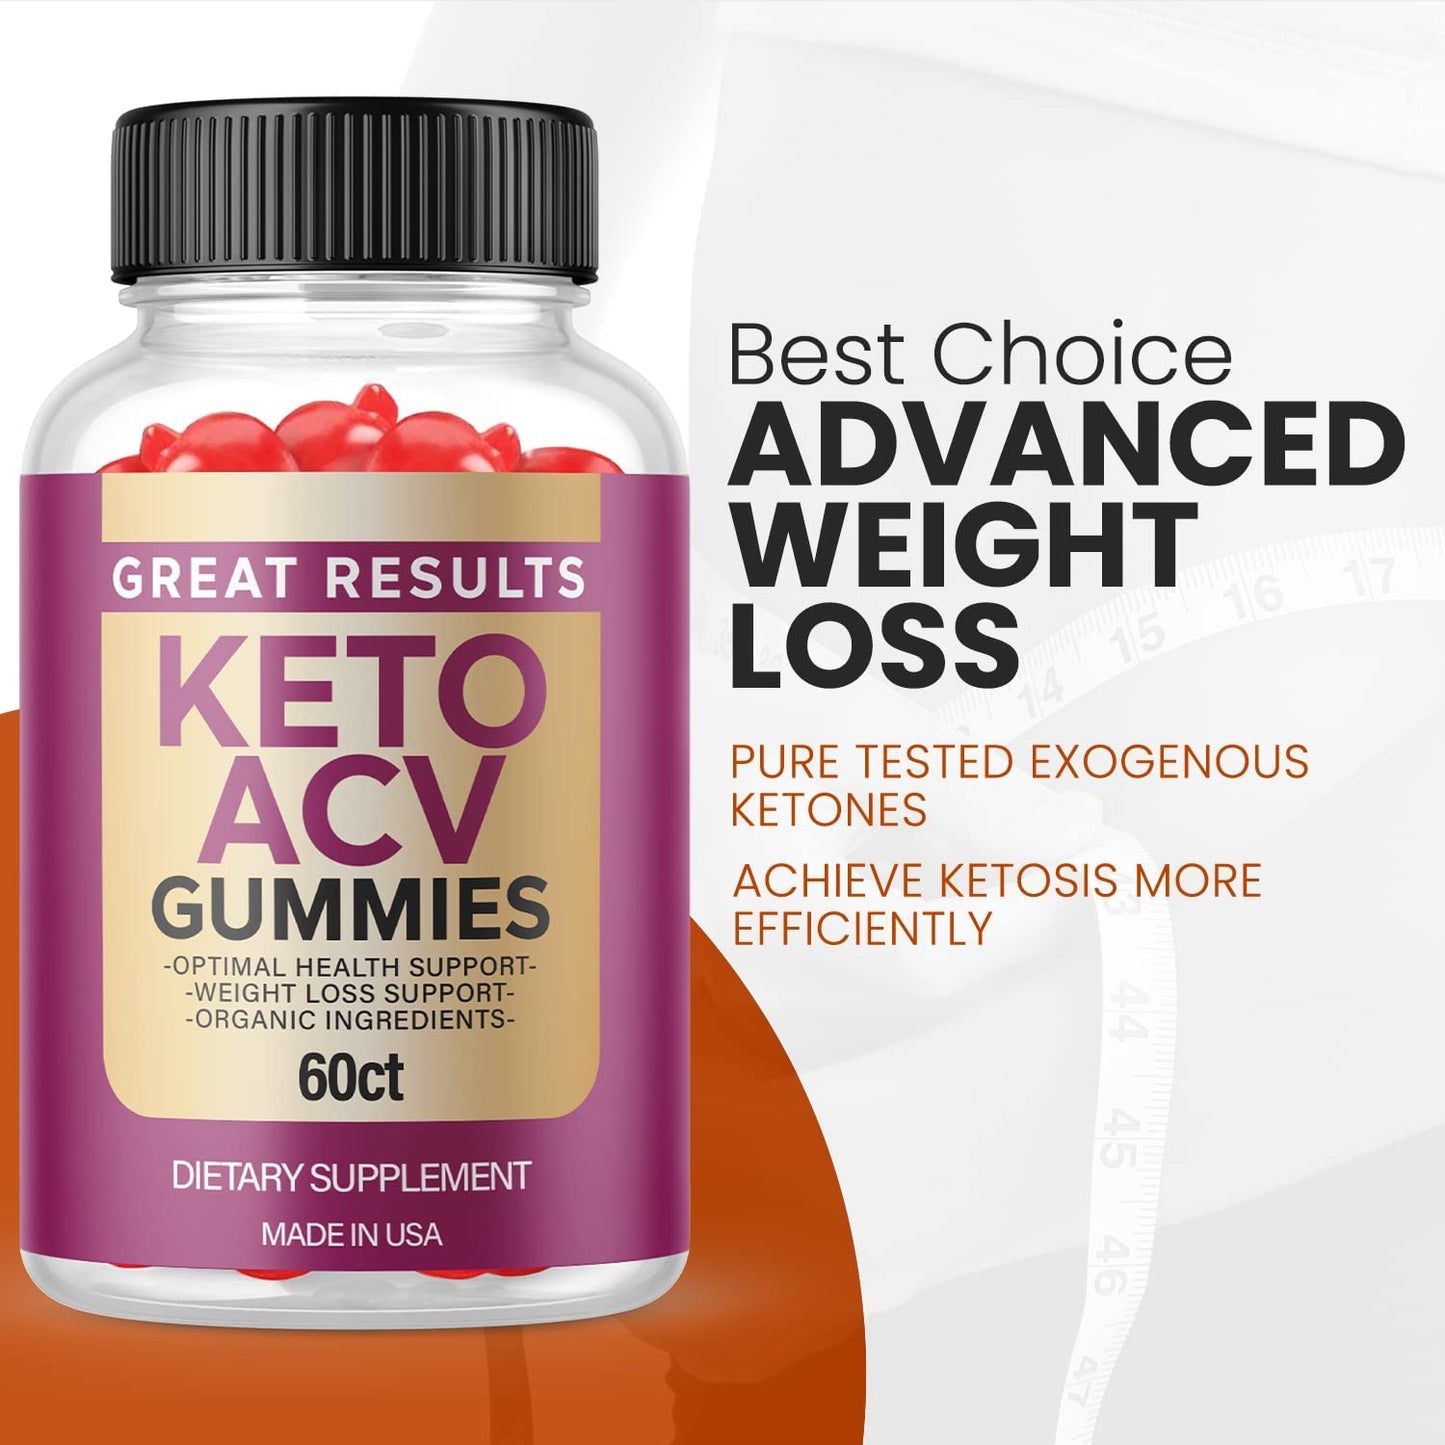 Great Results Keto ACV Gummies